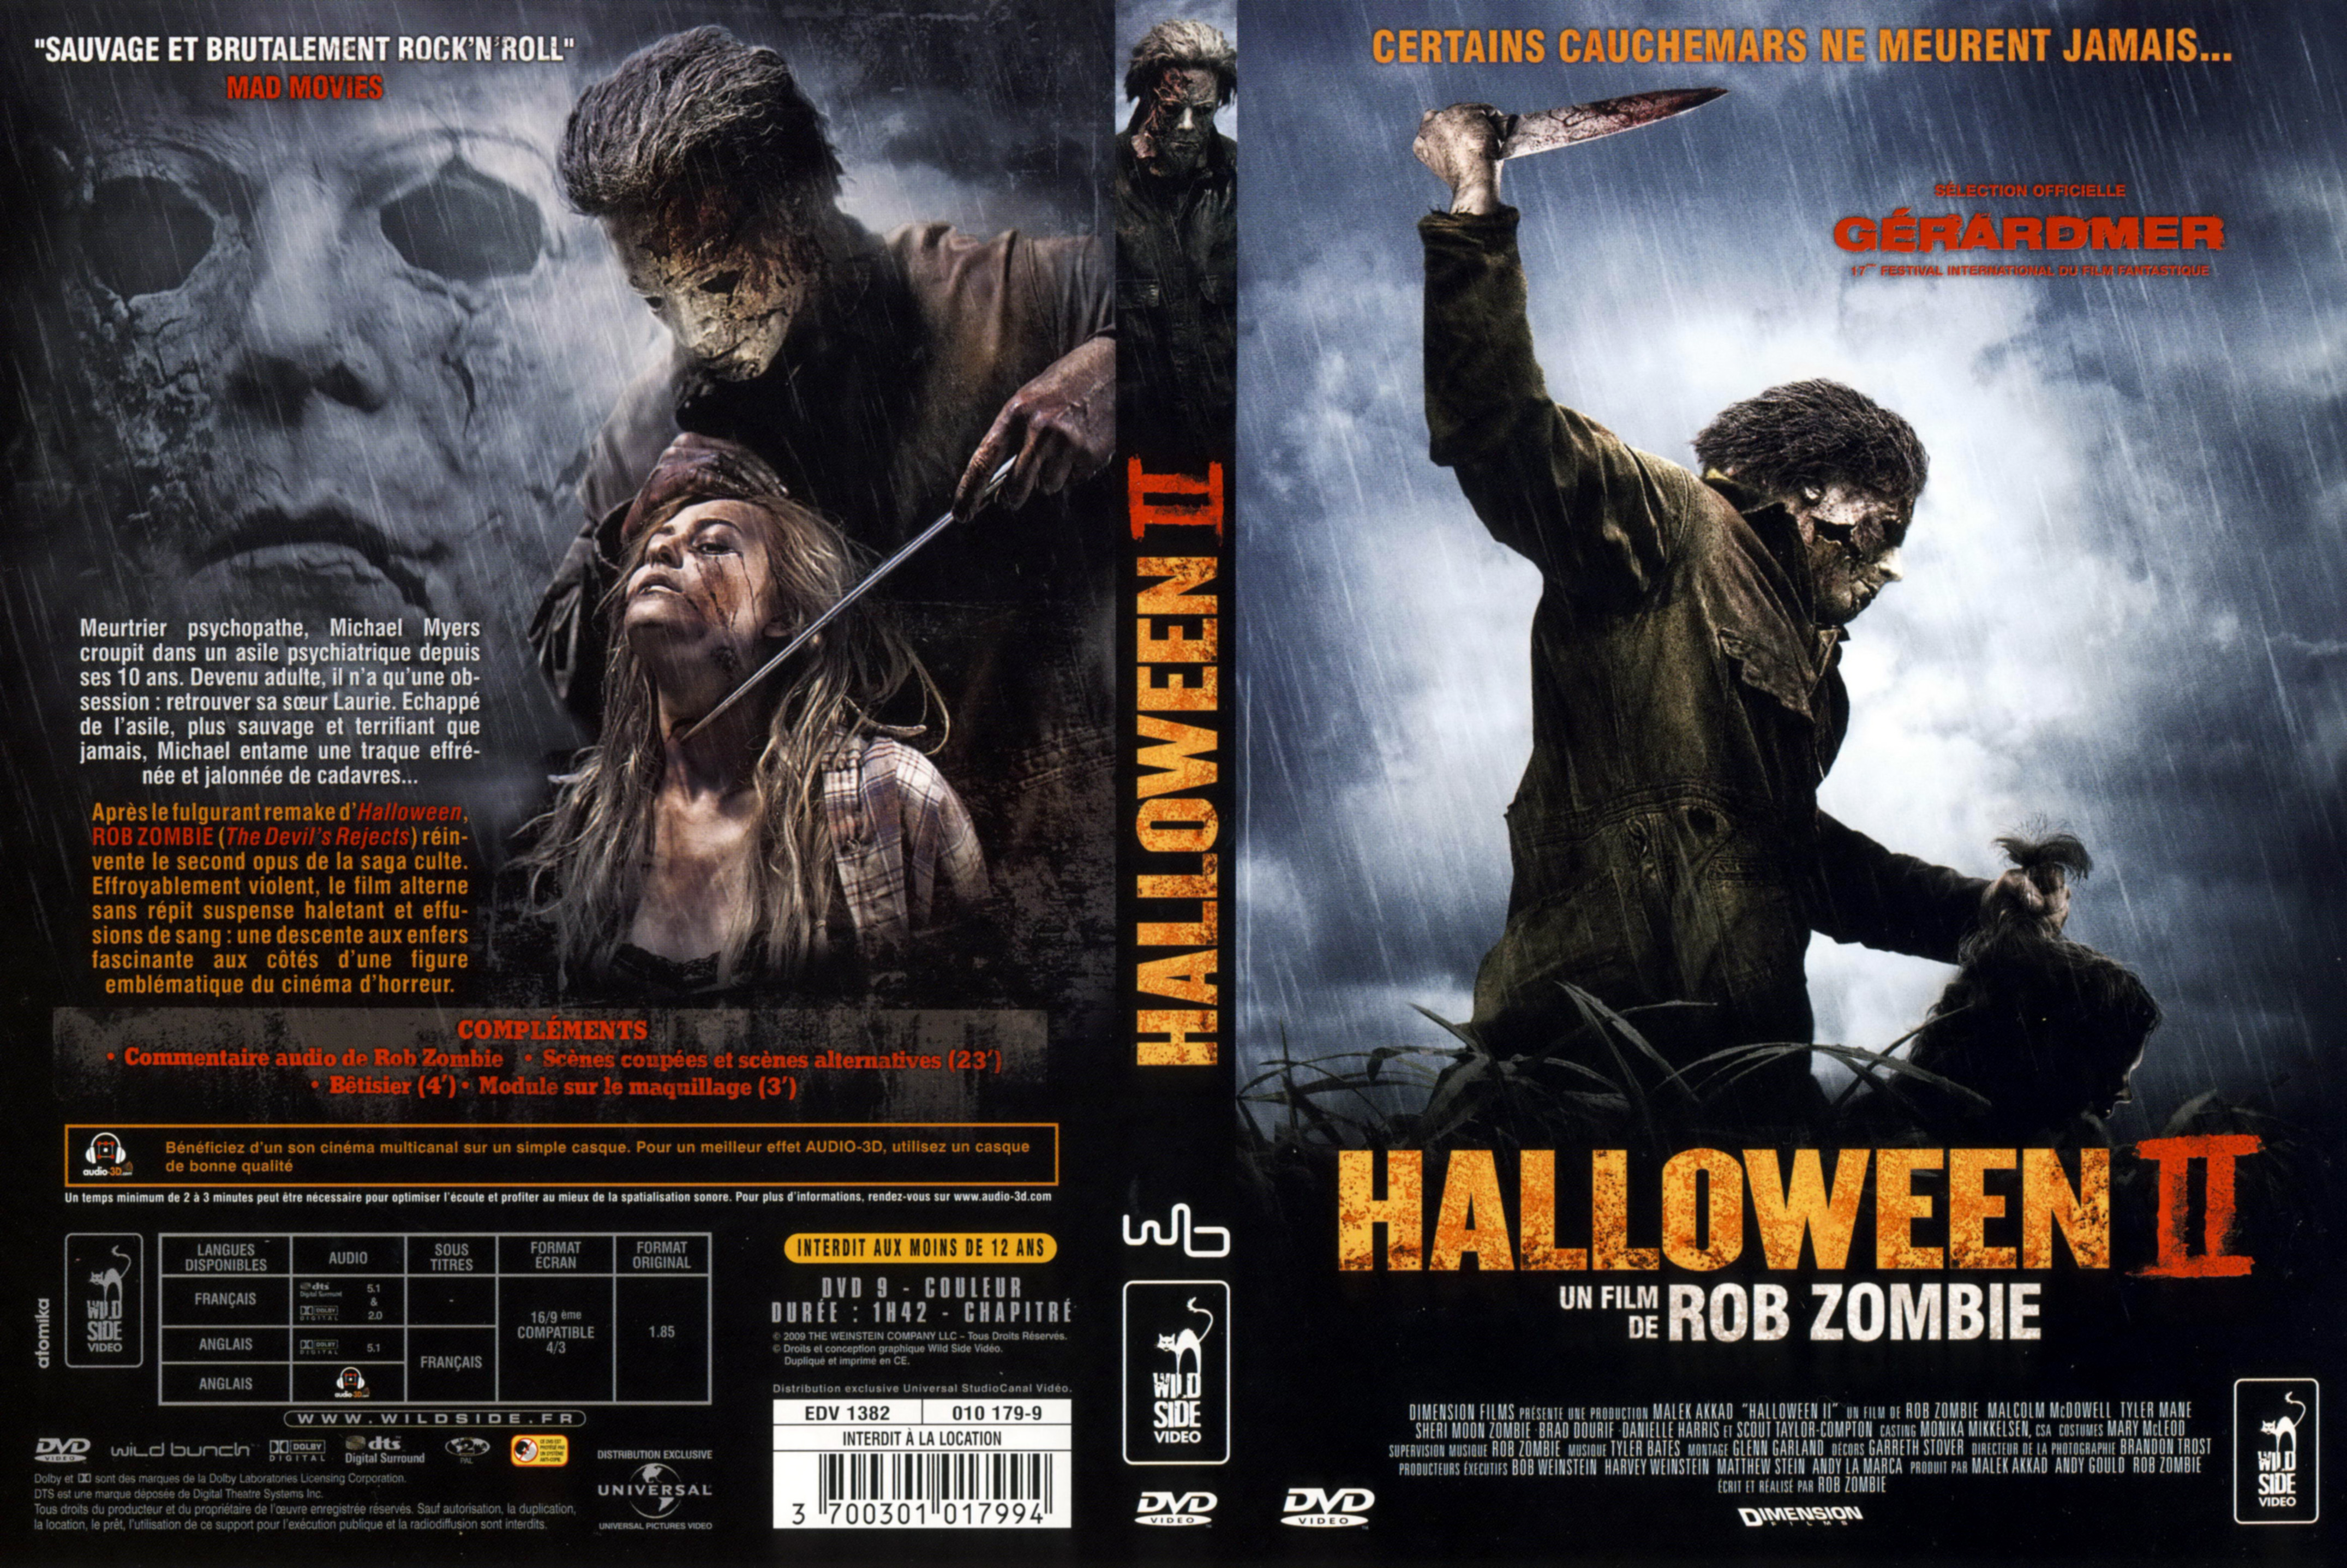 Jaquette DVD Halloween 2 (2009)